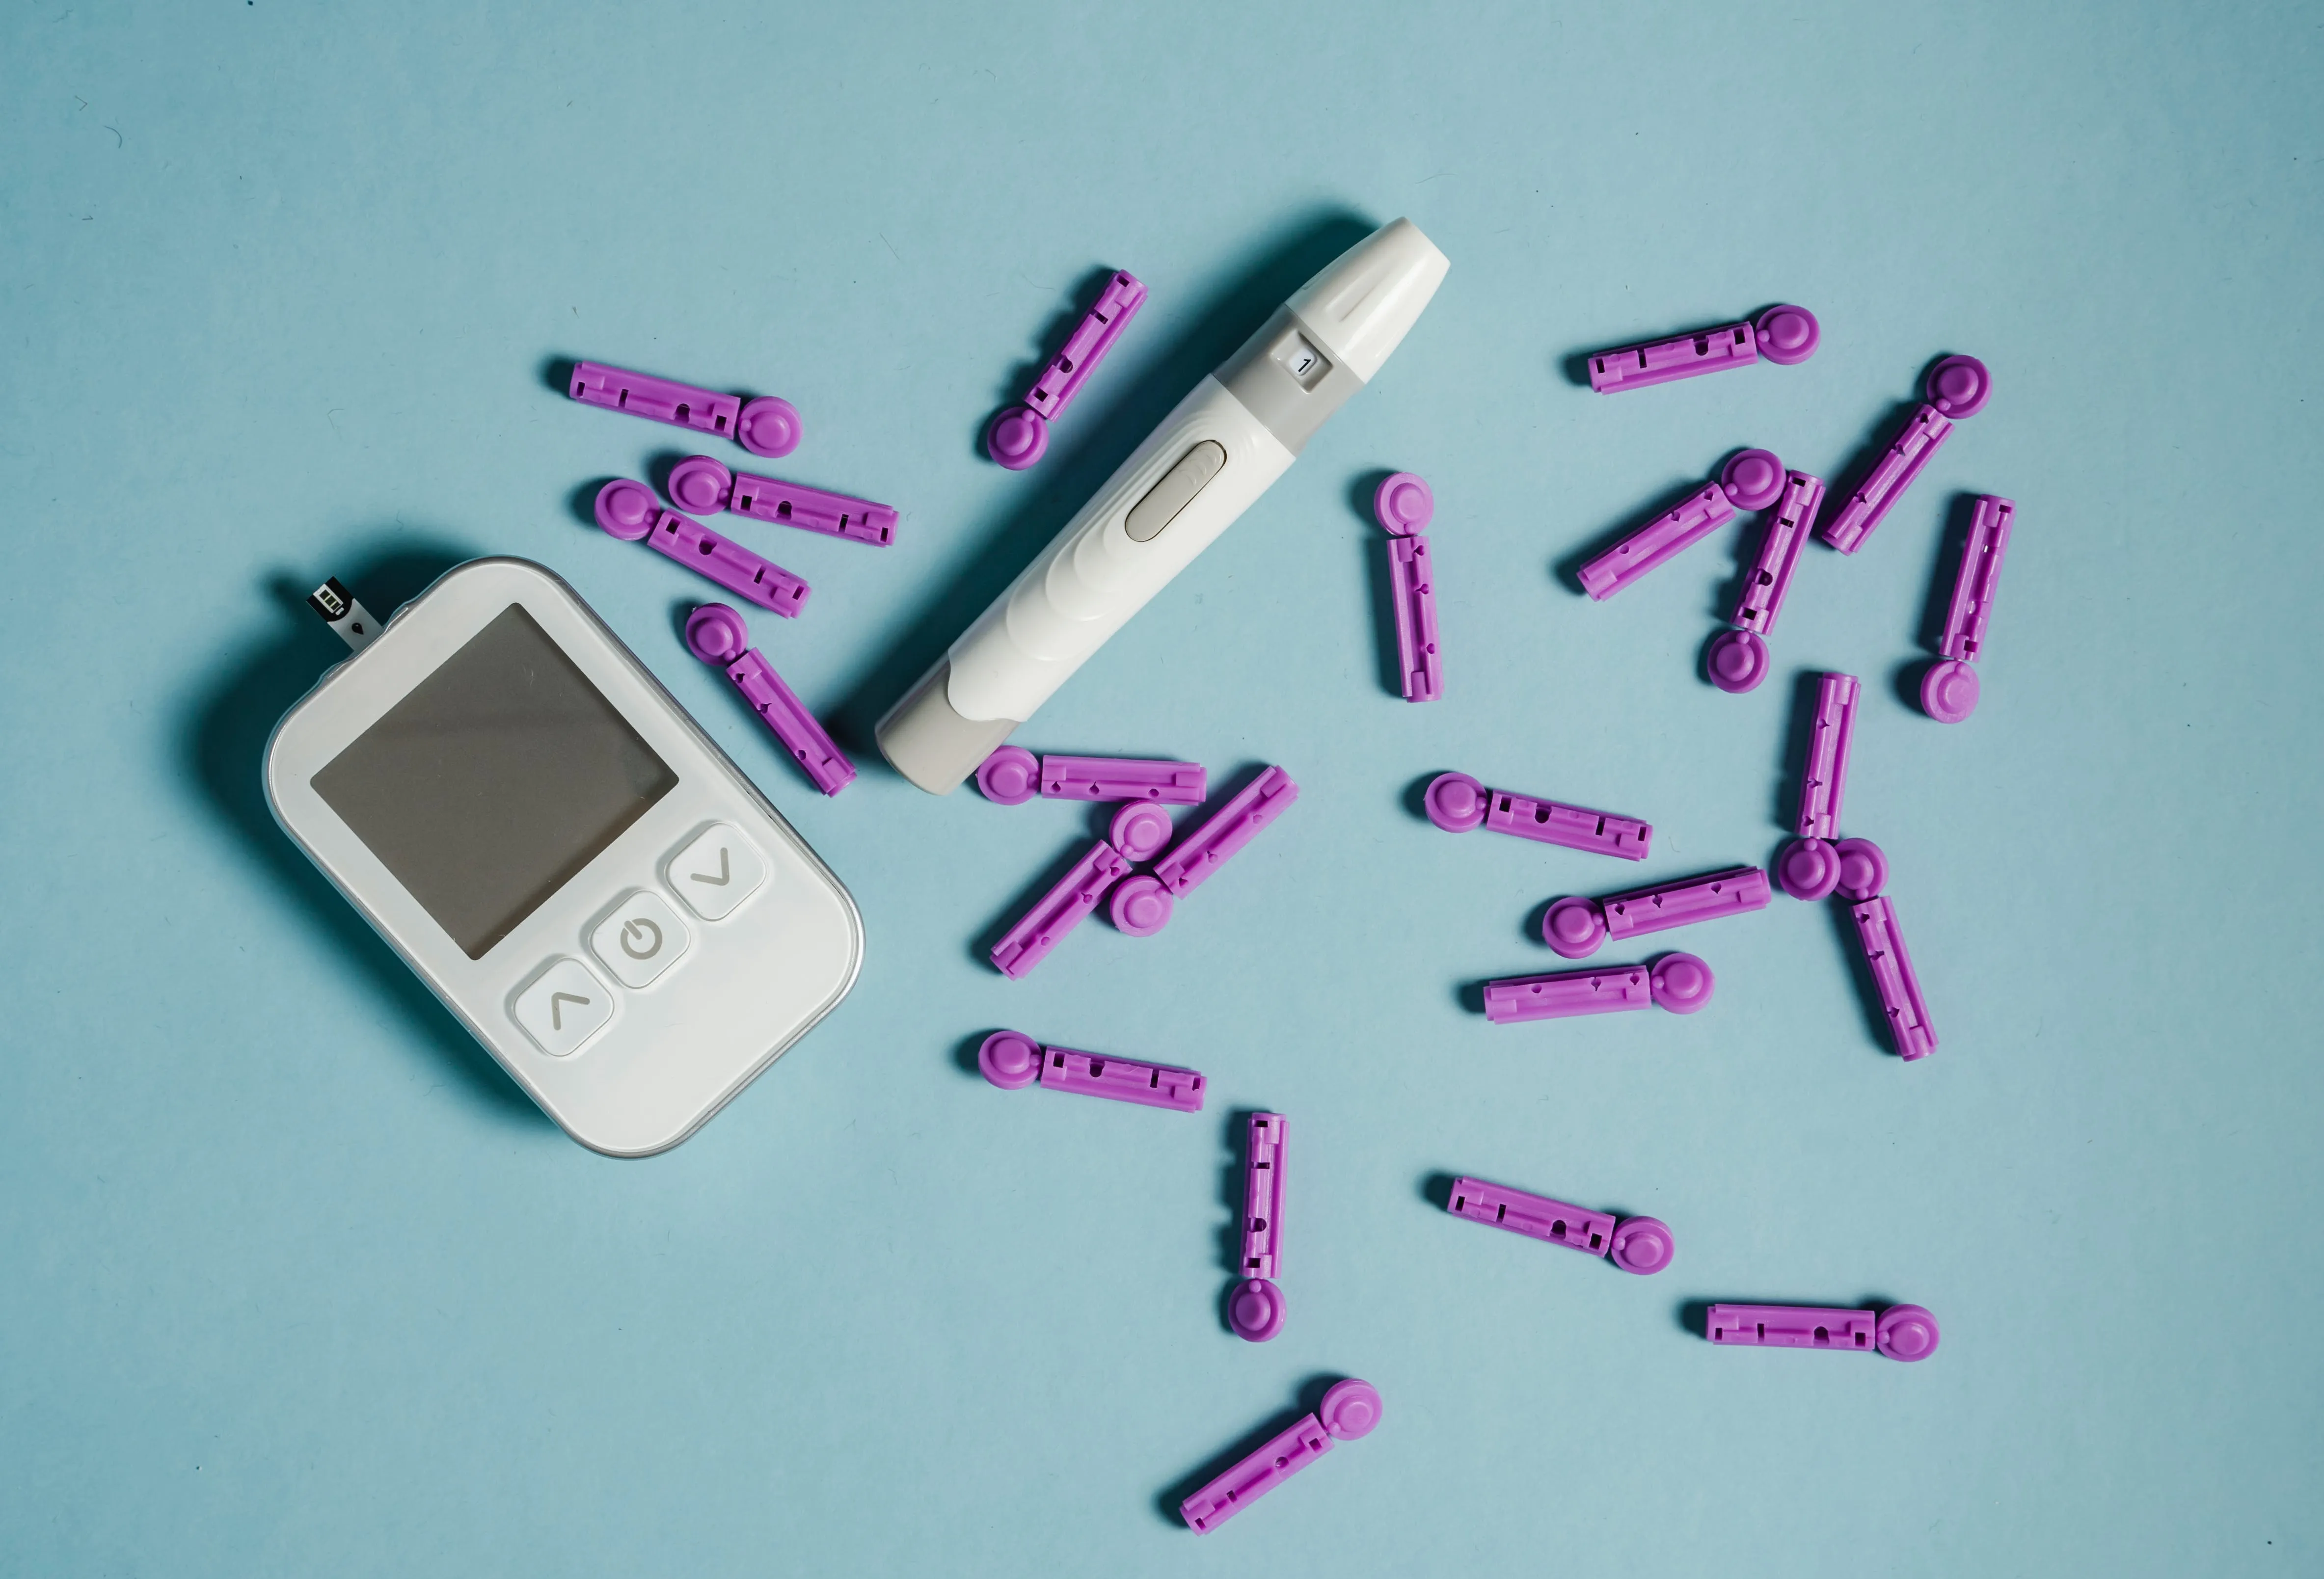 Historic Breakthrough: Cure for Diabetes Announced